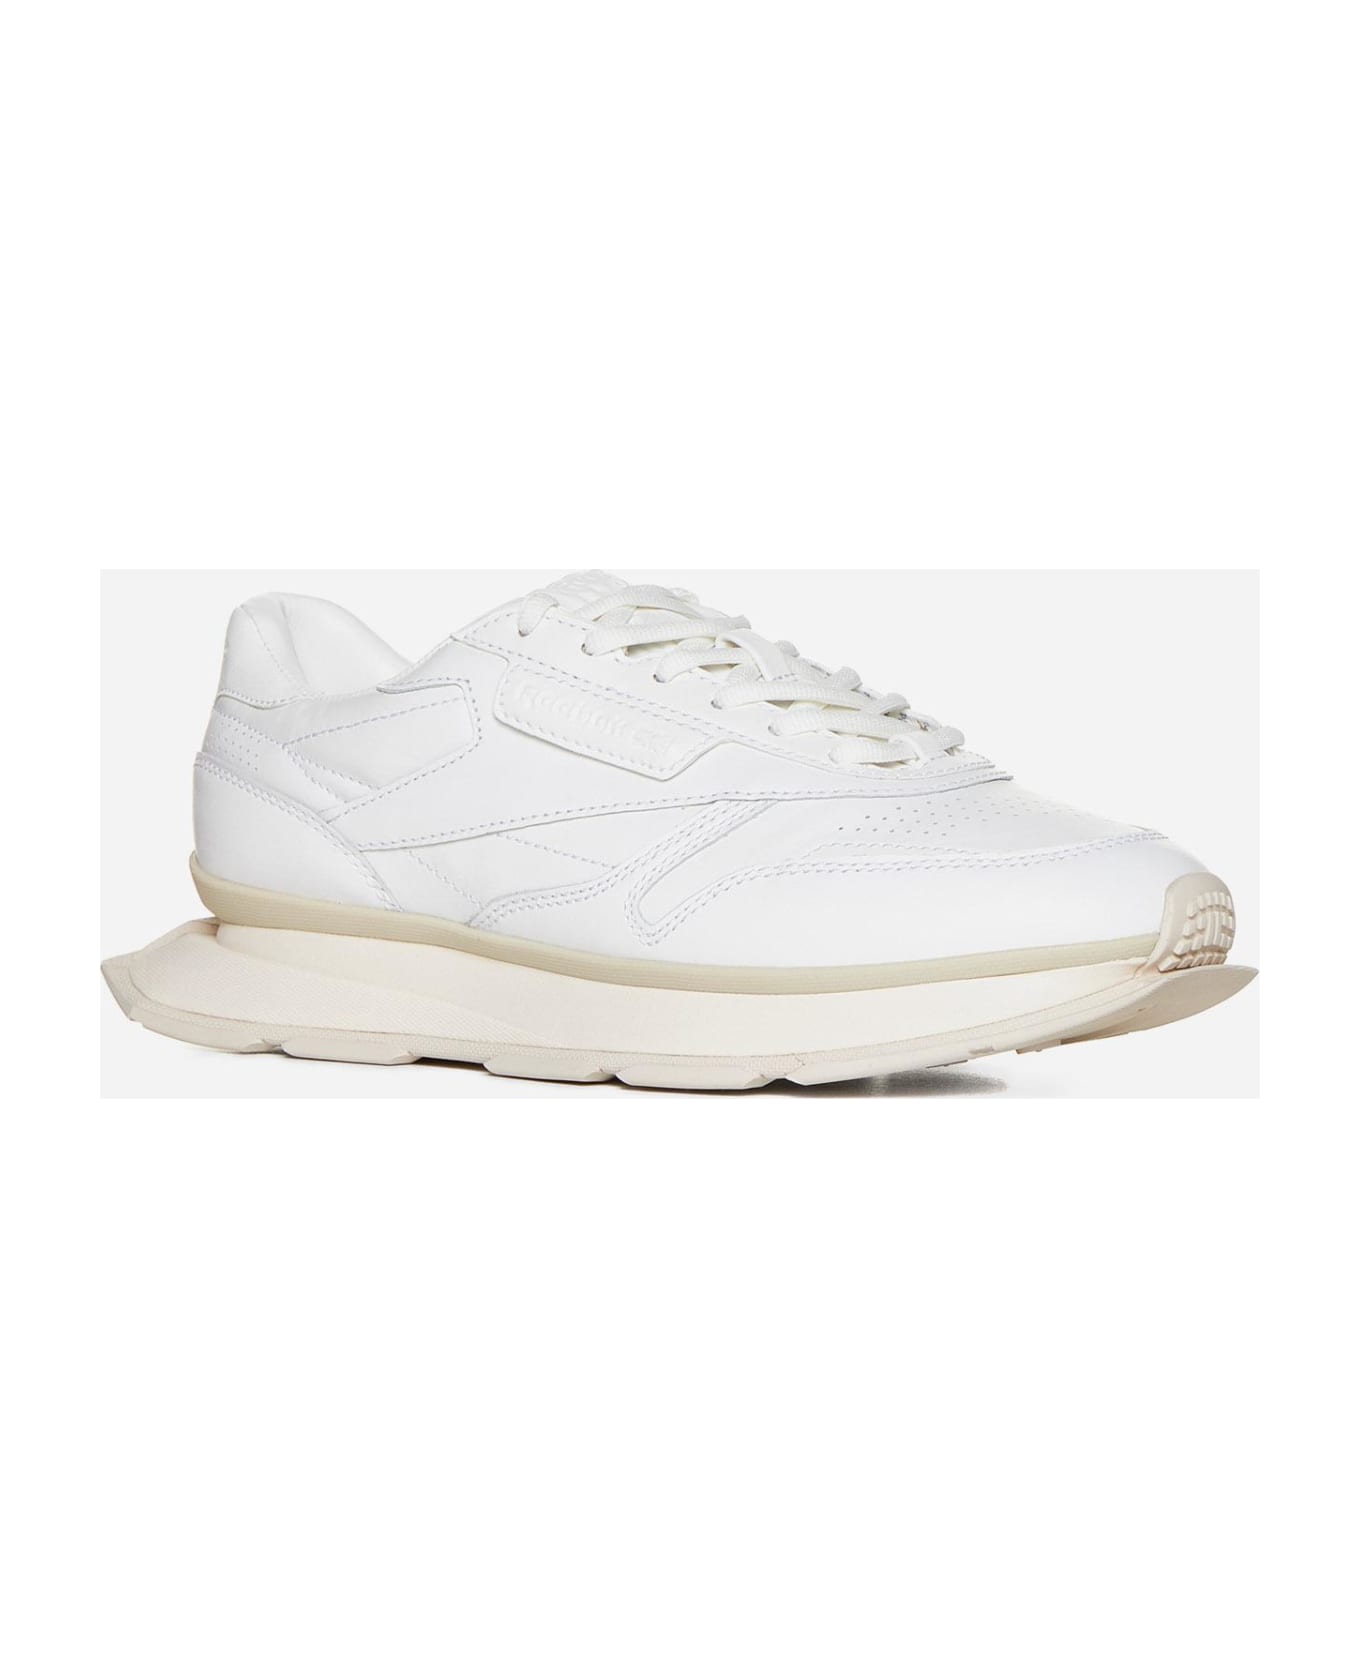 Reebok Ltd Leather Sneakers - White Lthe